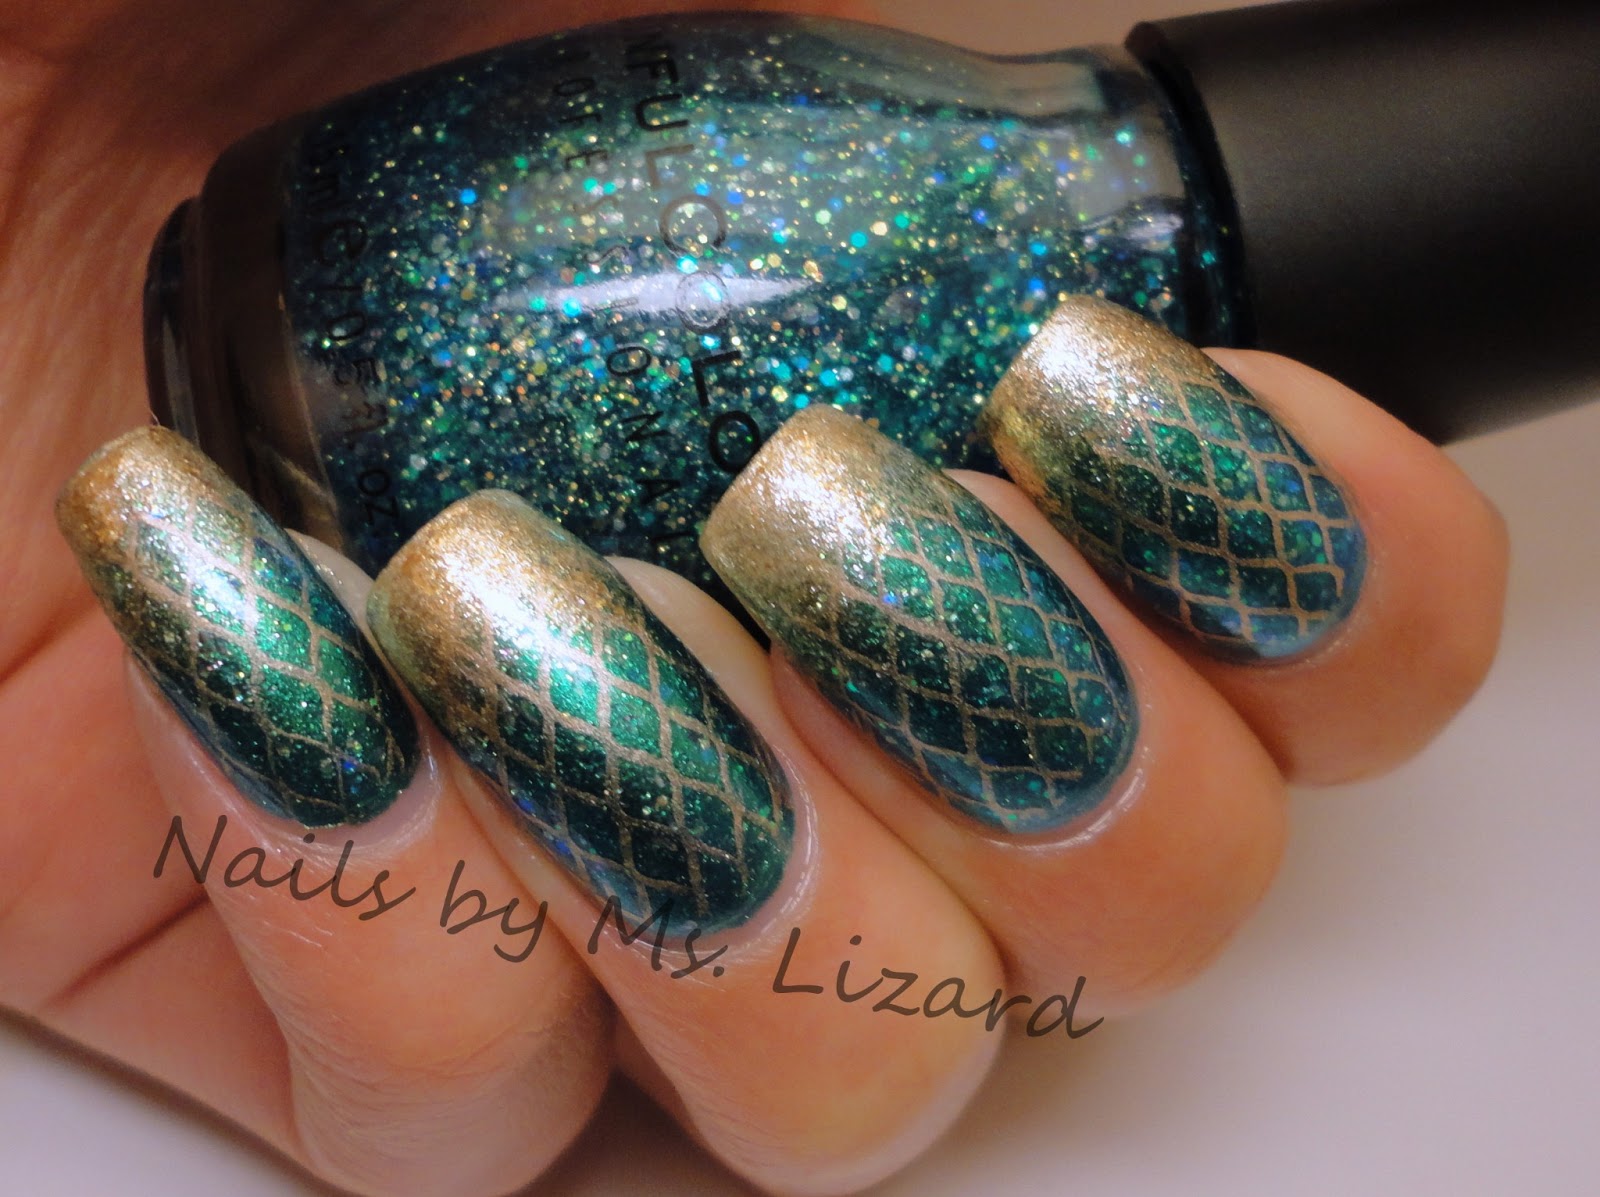 Nails by Ms. Lizard: Mermaid nails